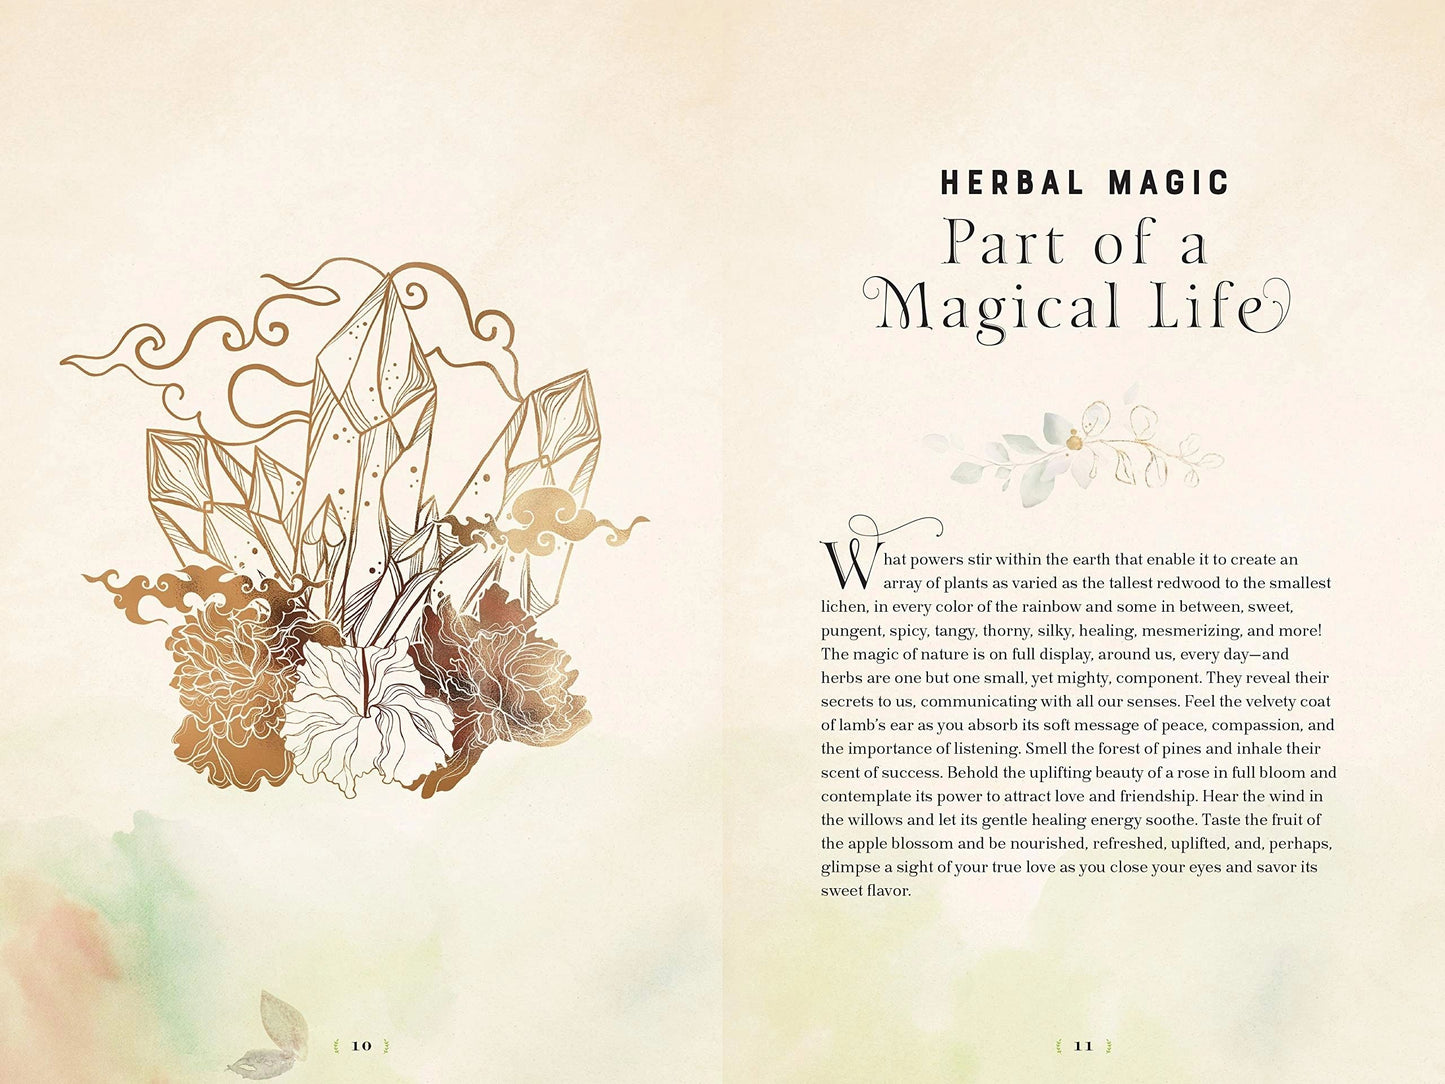 Herbal Magic - A handbook of Natural Spells, Charms & Potions